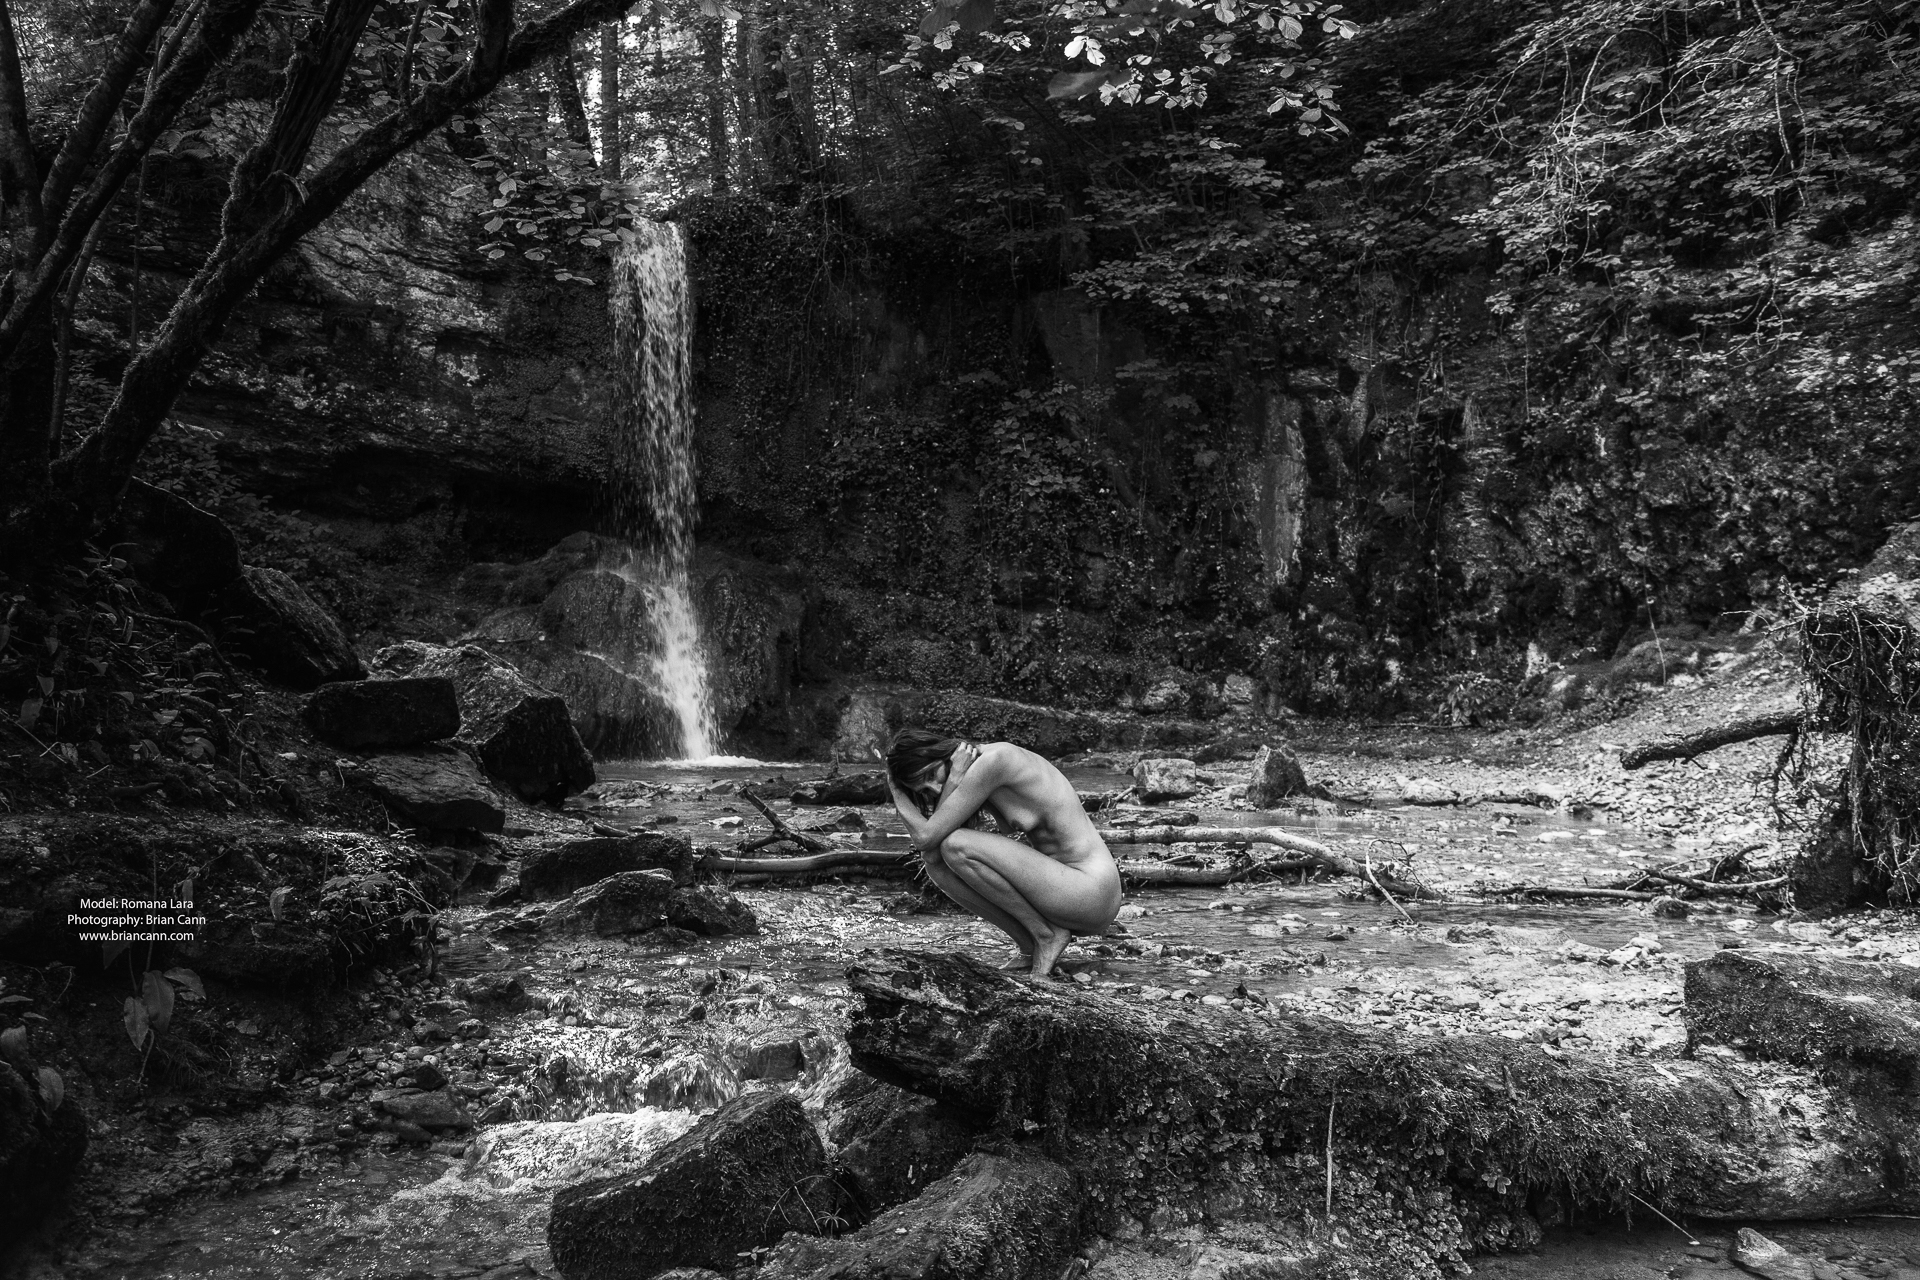 Romana Lara am Wasserfall